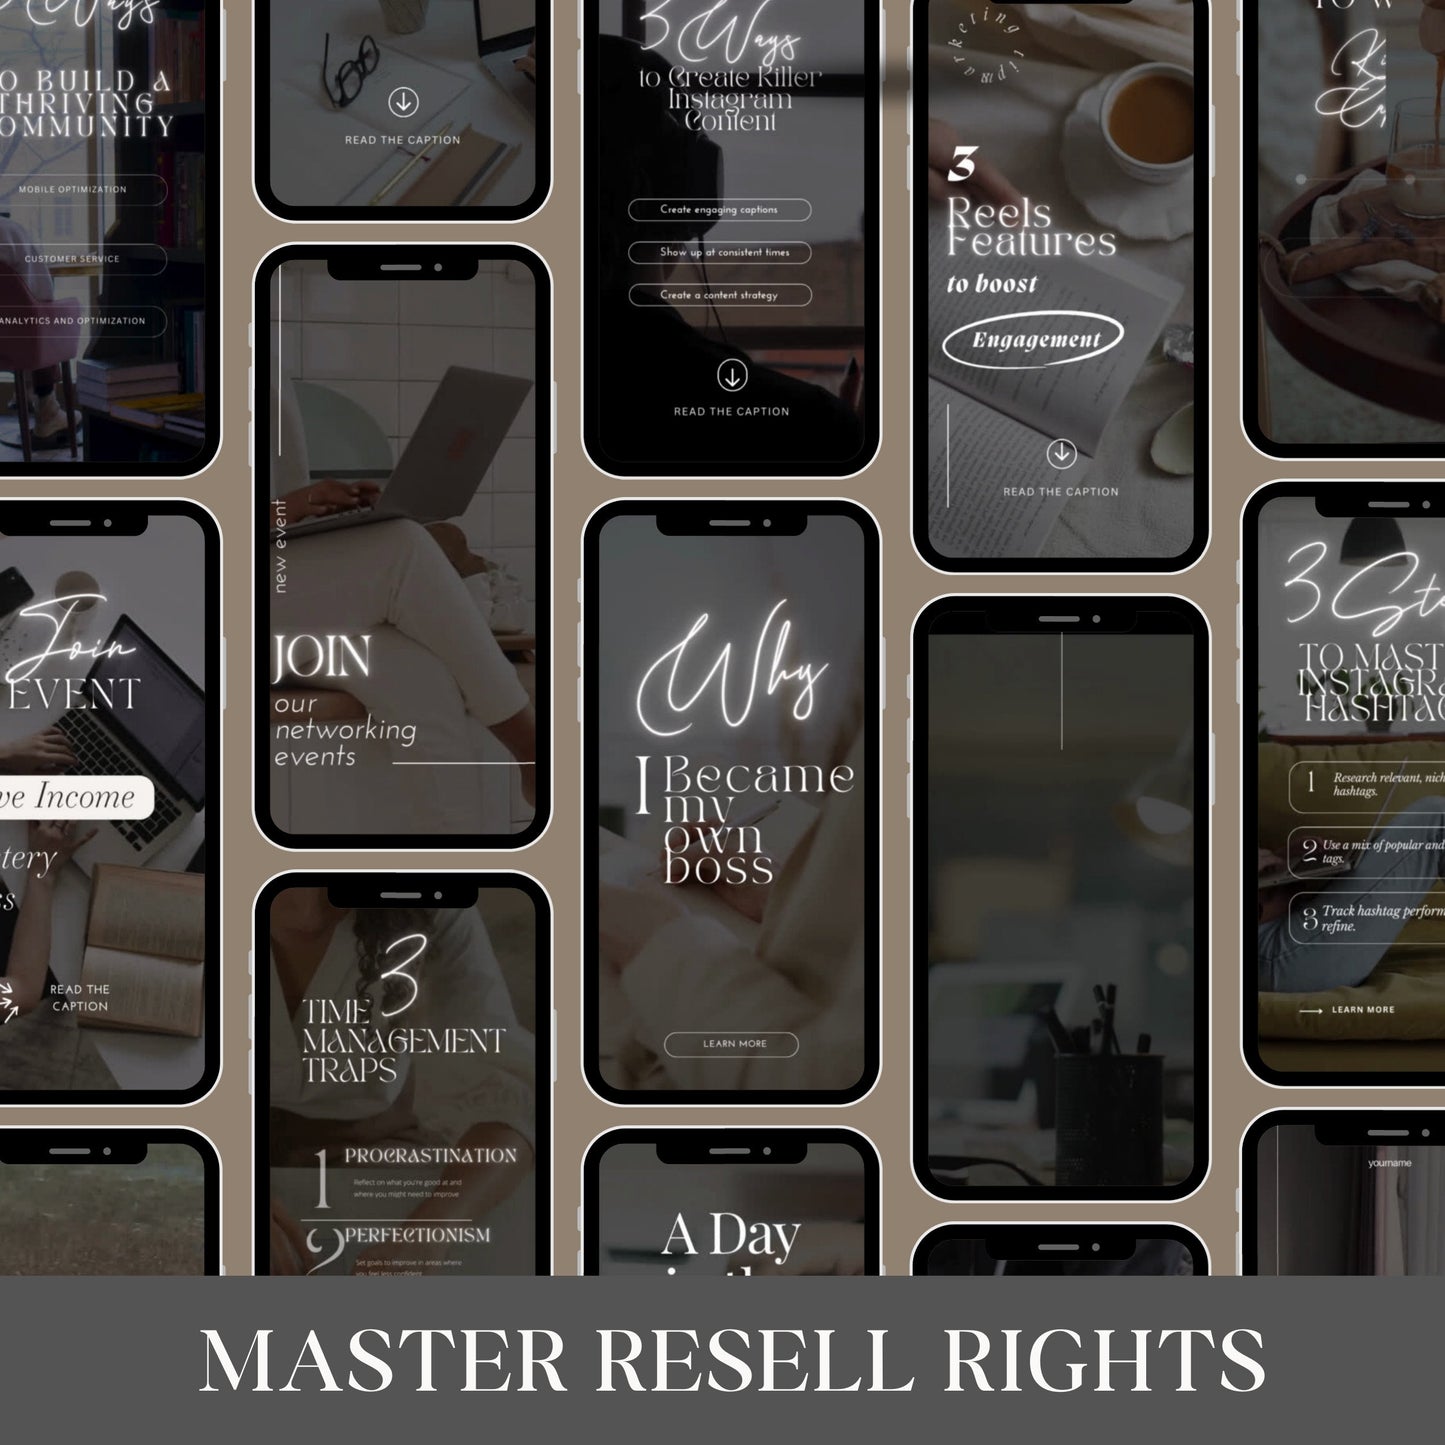 MRR Faceless Instagram Reels Coaching-Vorlagen Master Resell Rights &amp; PLR Faceless Marketing Branding Kit Instagram-Vorlagen Verkaufen auf Etsy